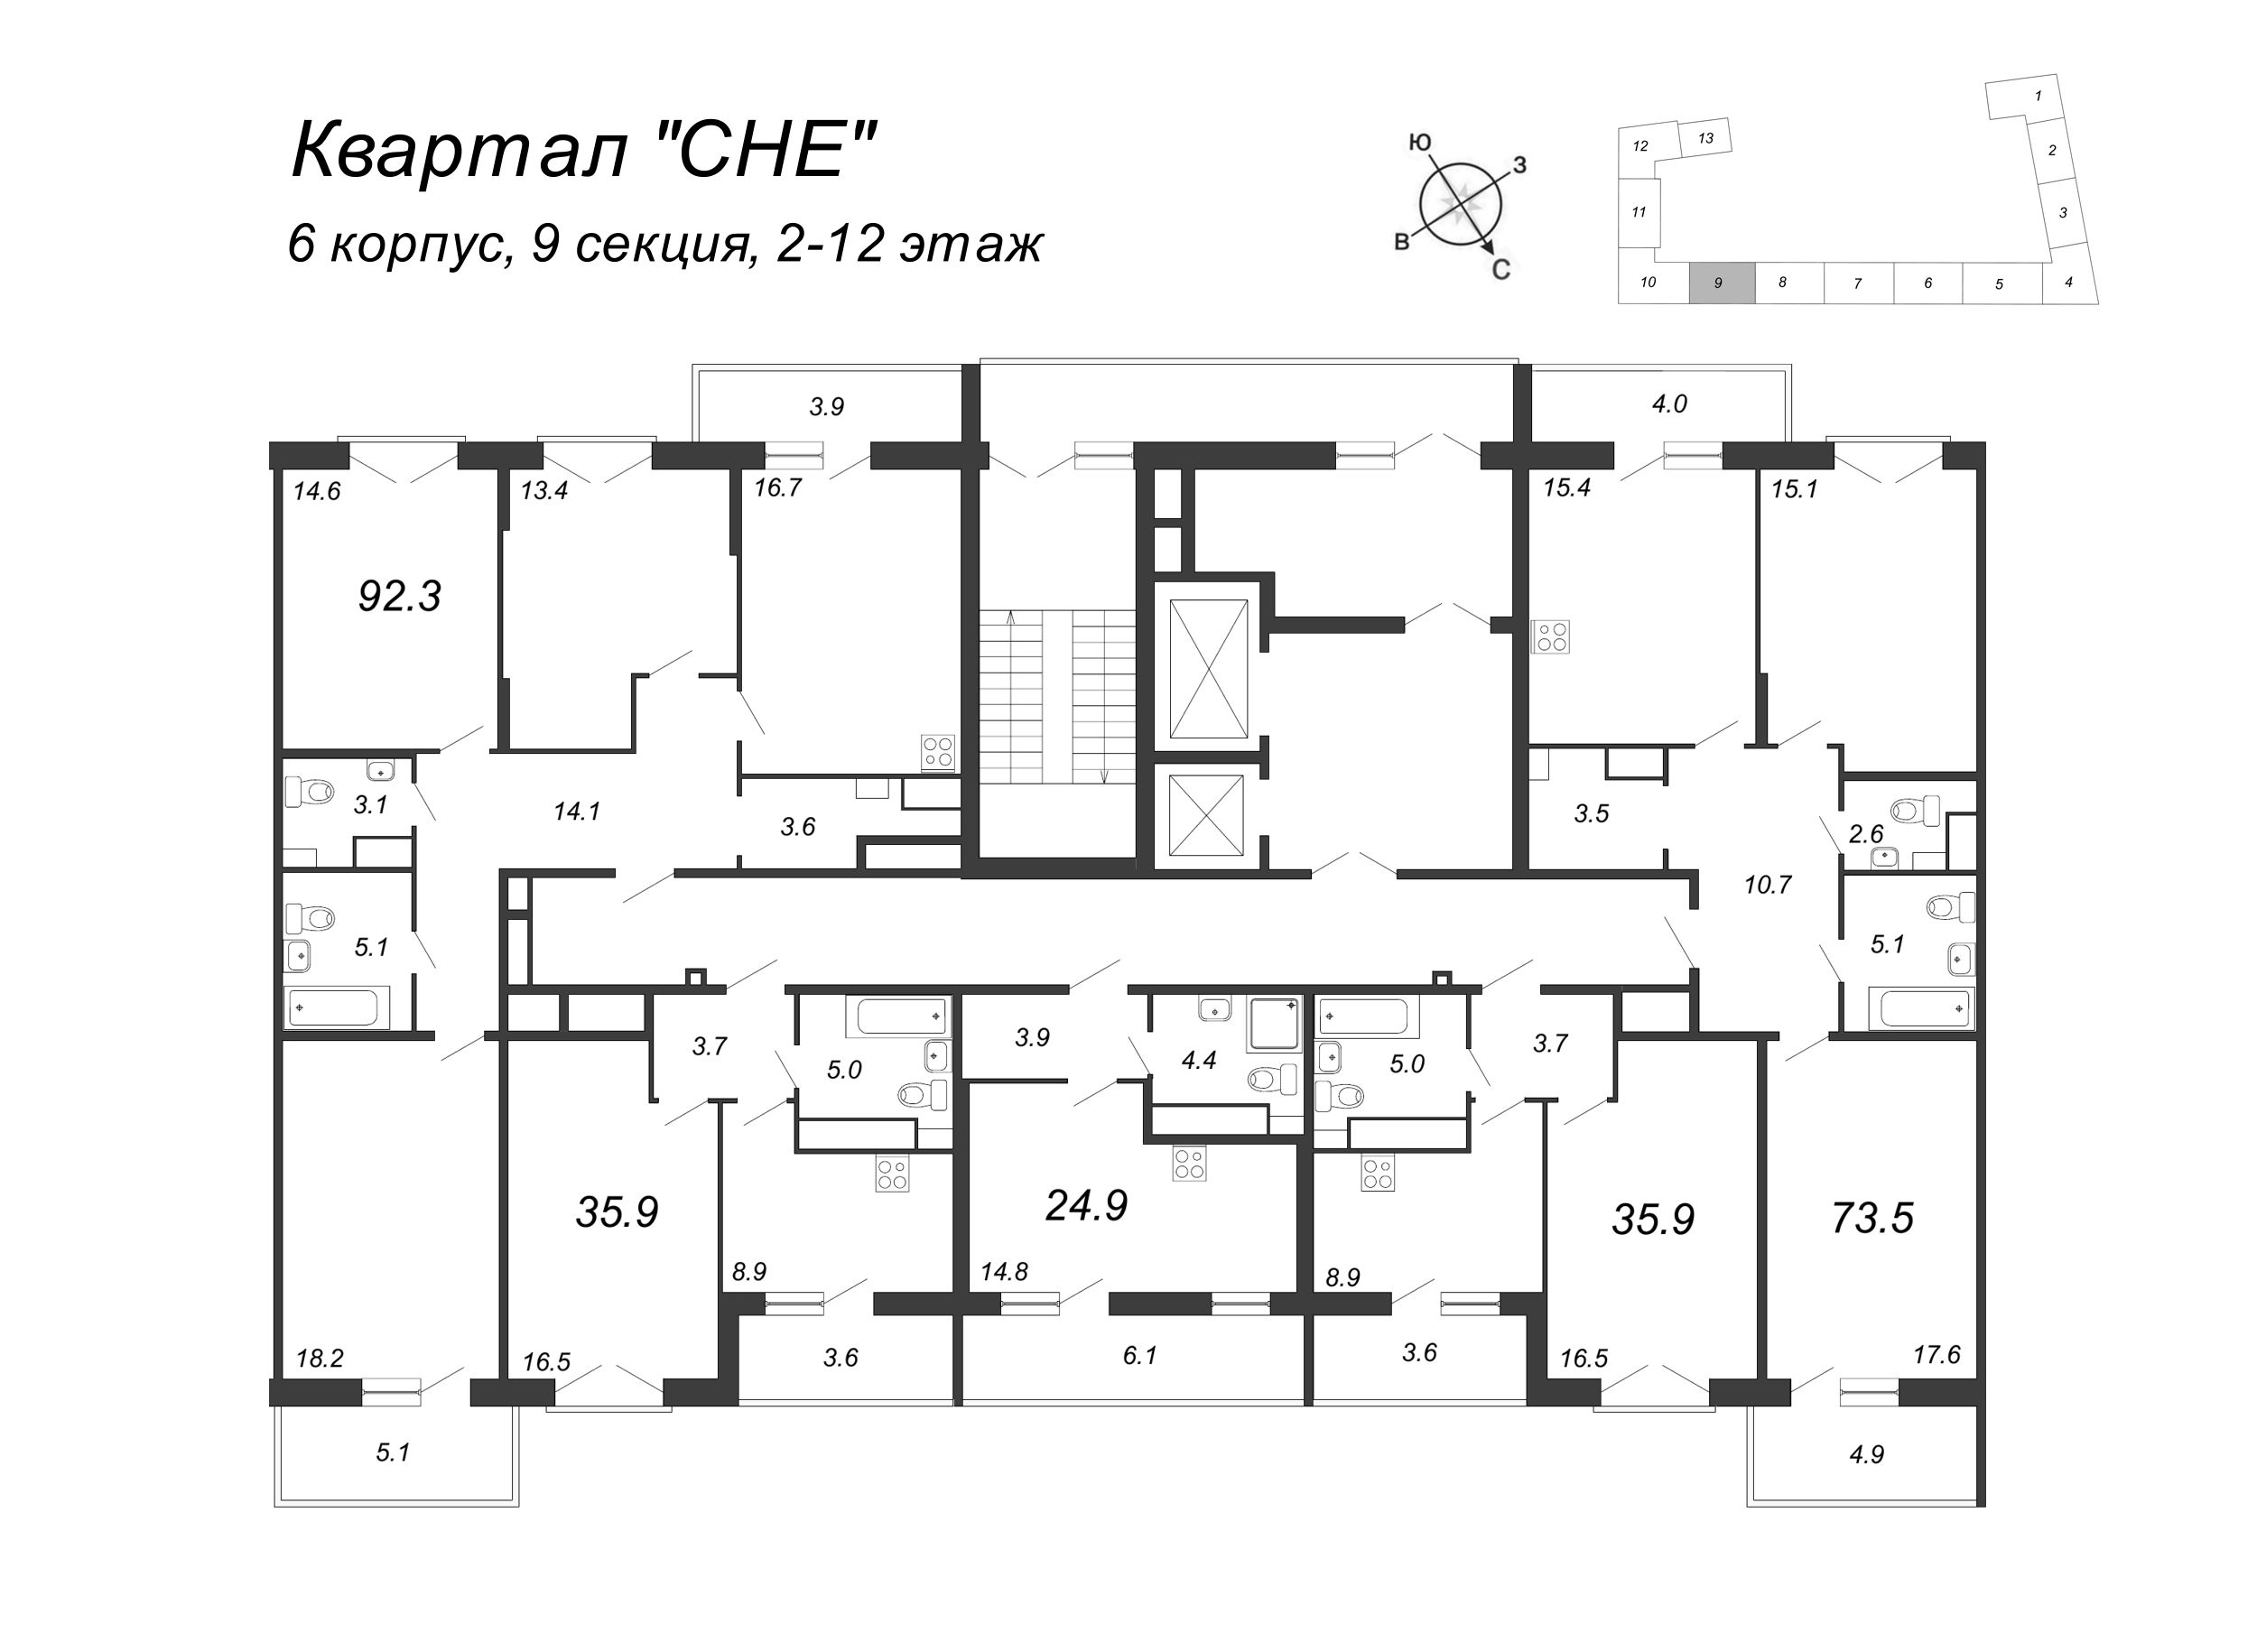 3-комнатная квартира, 94.1 м² в ЖК "Квартал Che" - планировка этажа